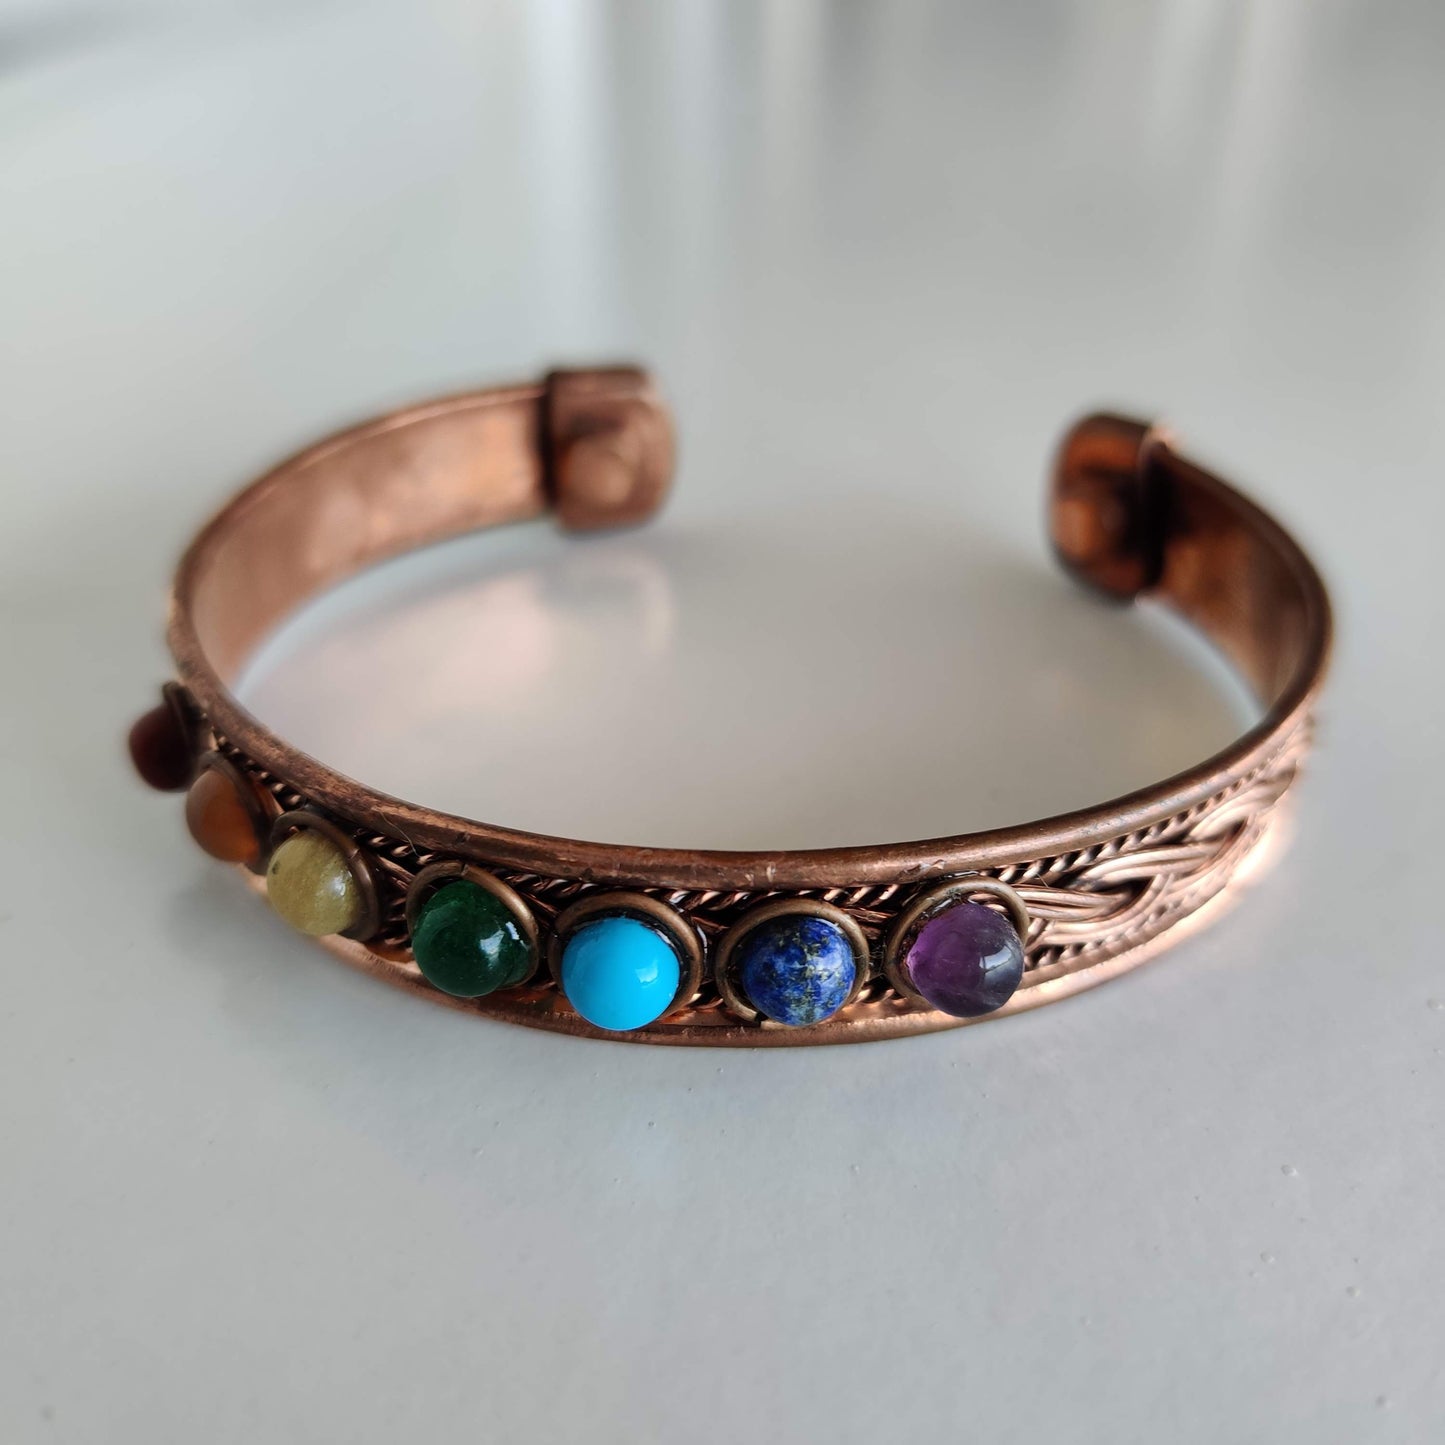 Chakra Copper Magnetic Bracelet with Woven Pattern - Rivendell Shop